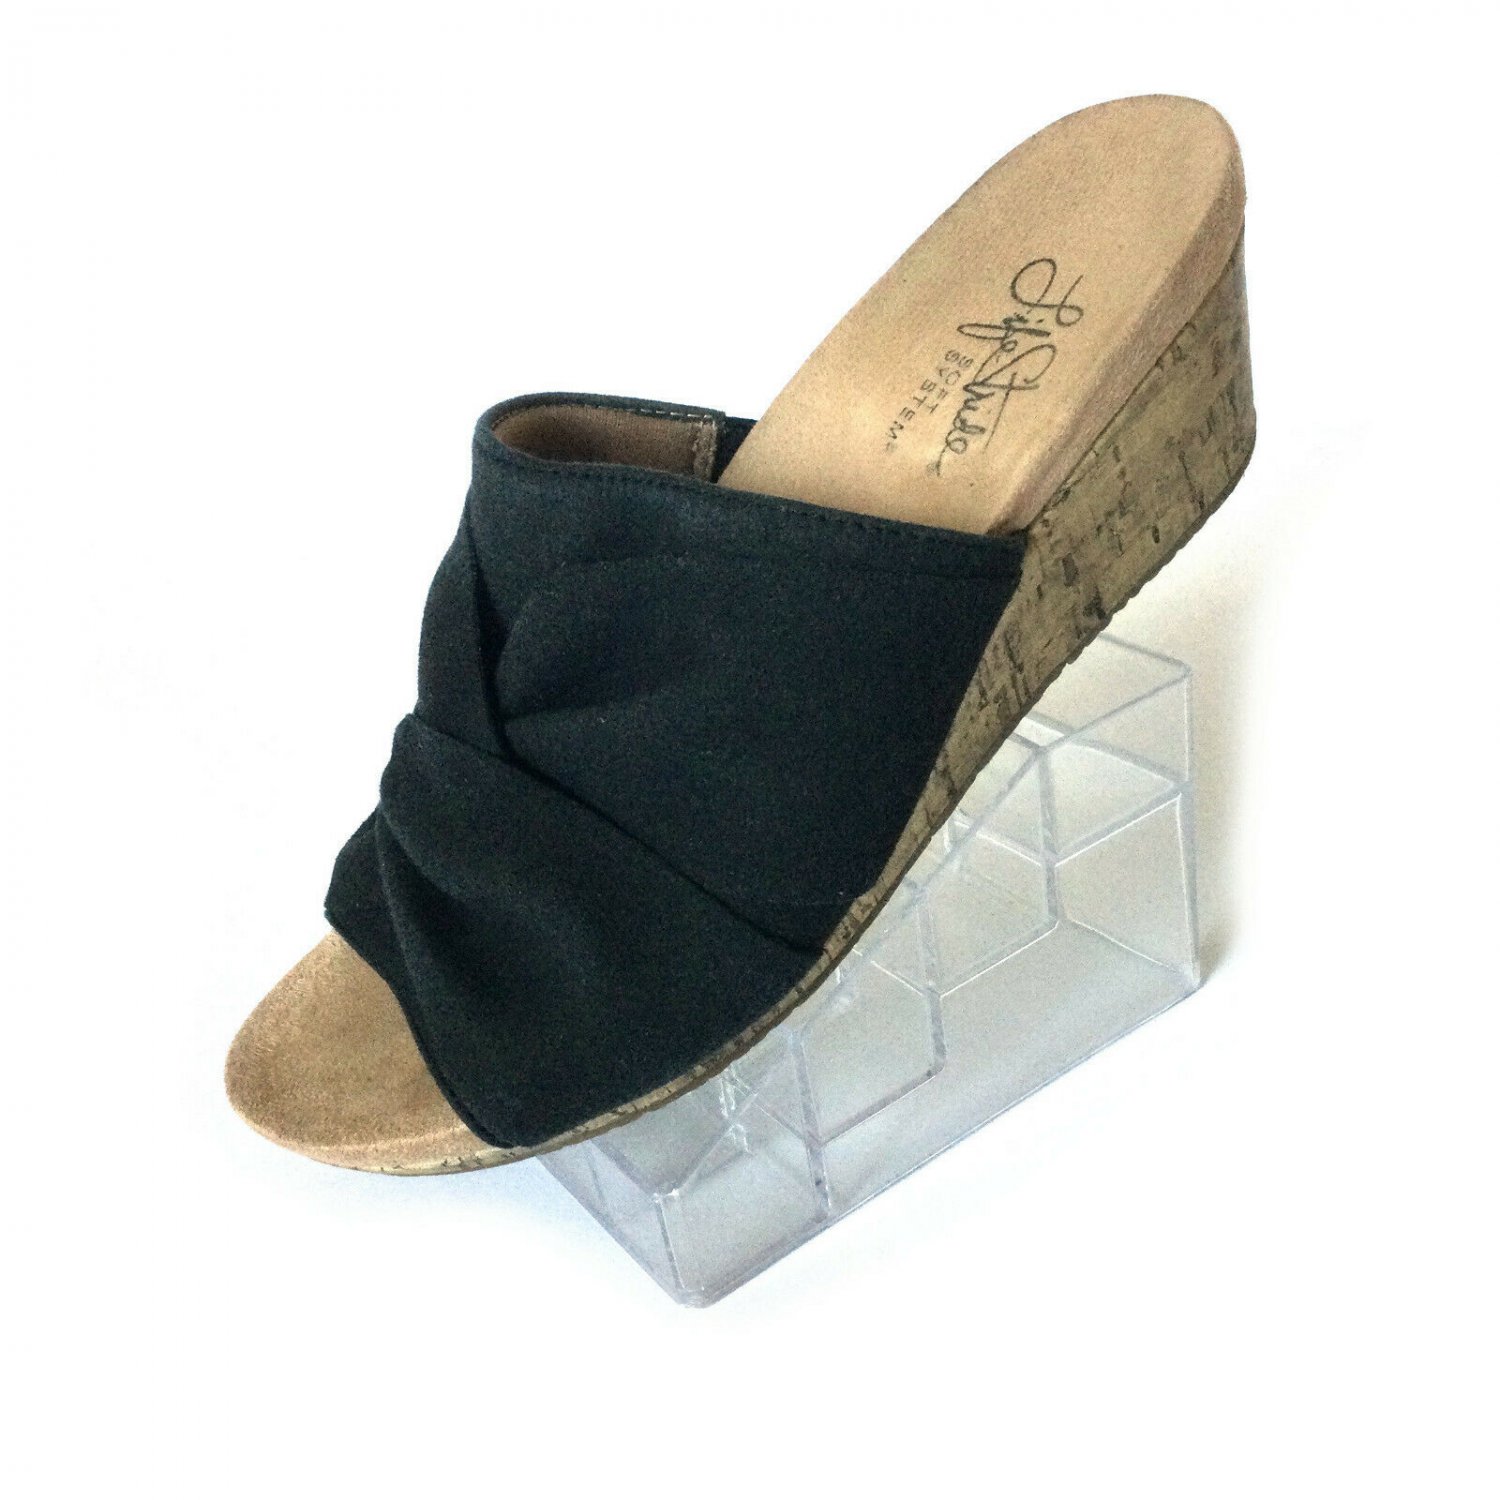 Life Stride Women's Mallory Slide Cork Wedge Black Sandals Shoes Size 6M